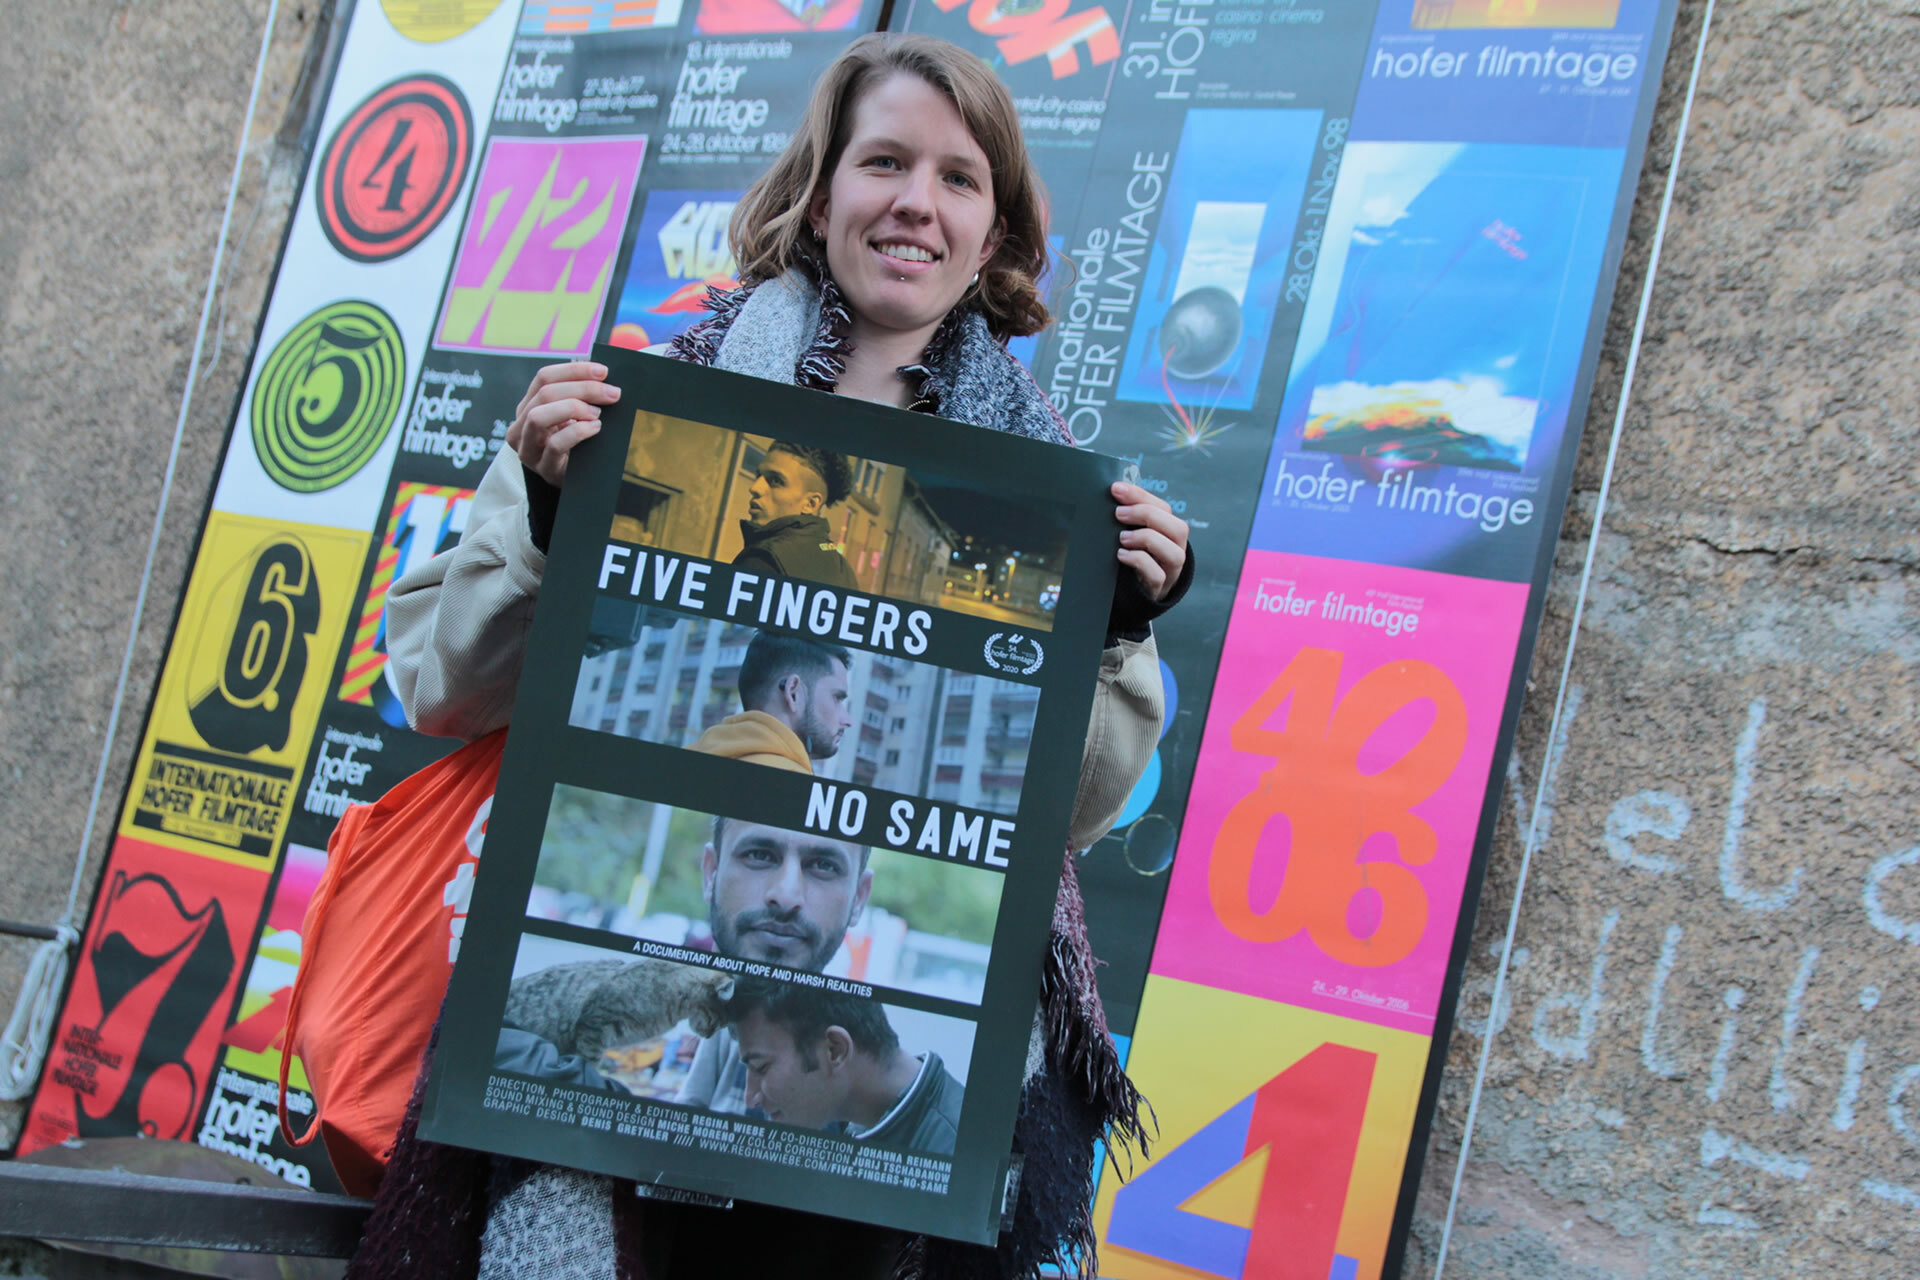 Co-director Regina Wiebe presents FIVE FINGERS NO SAME at the 54th Hof International Film Festival.